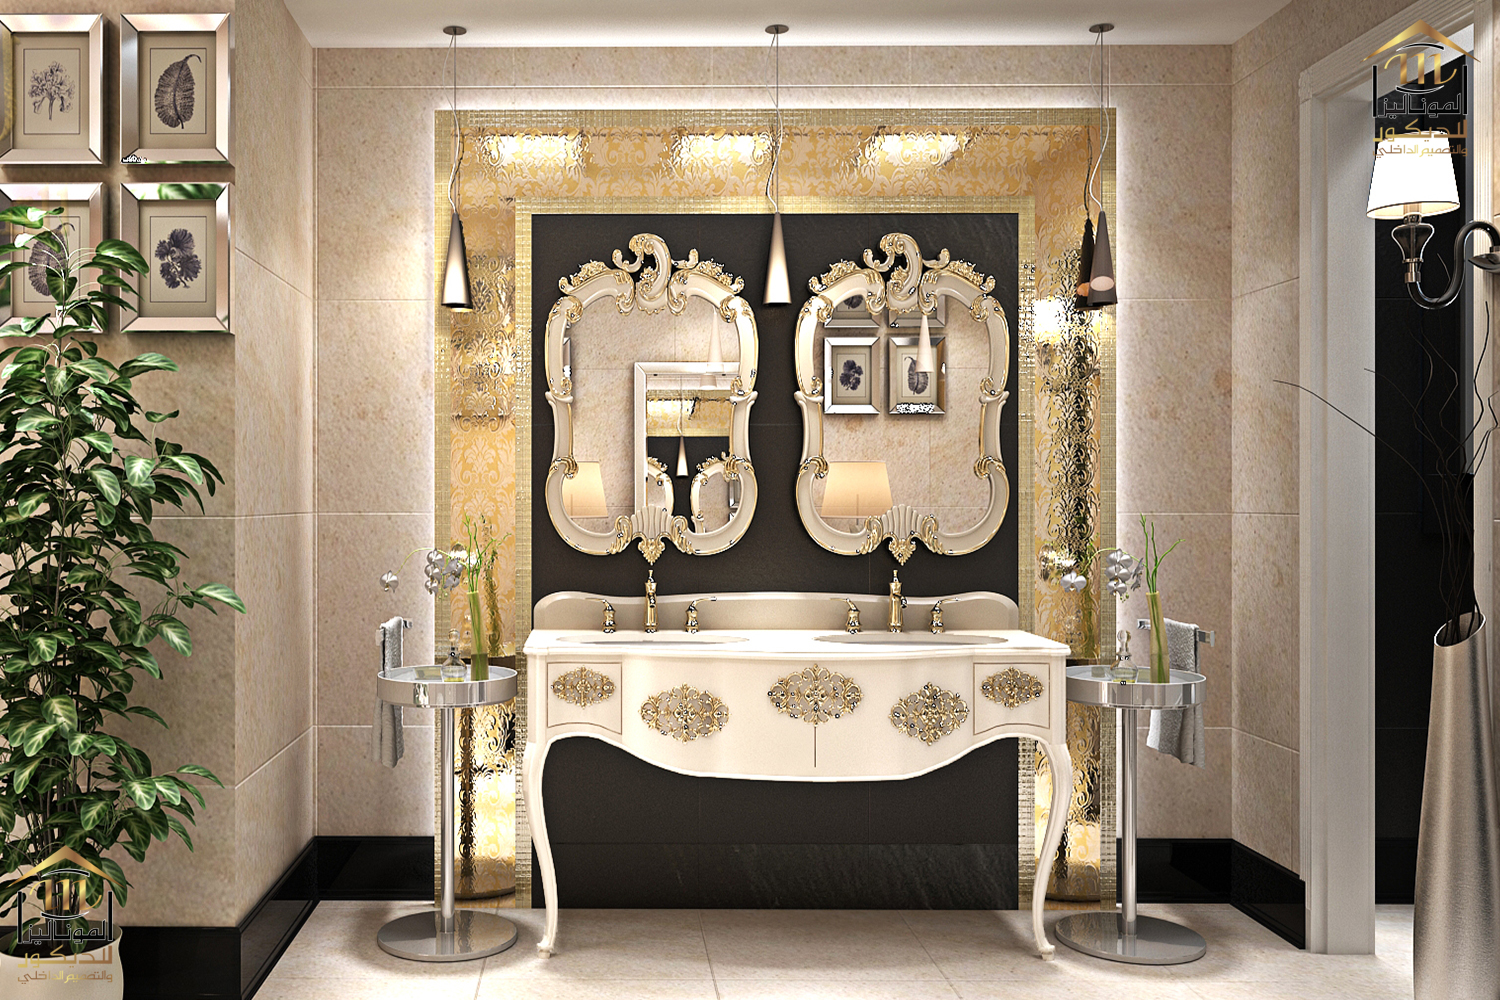 almonaliza group_decoration&interior design_bathrooms (7).jpg